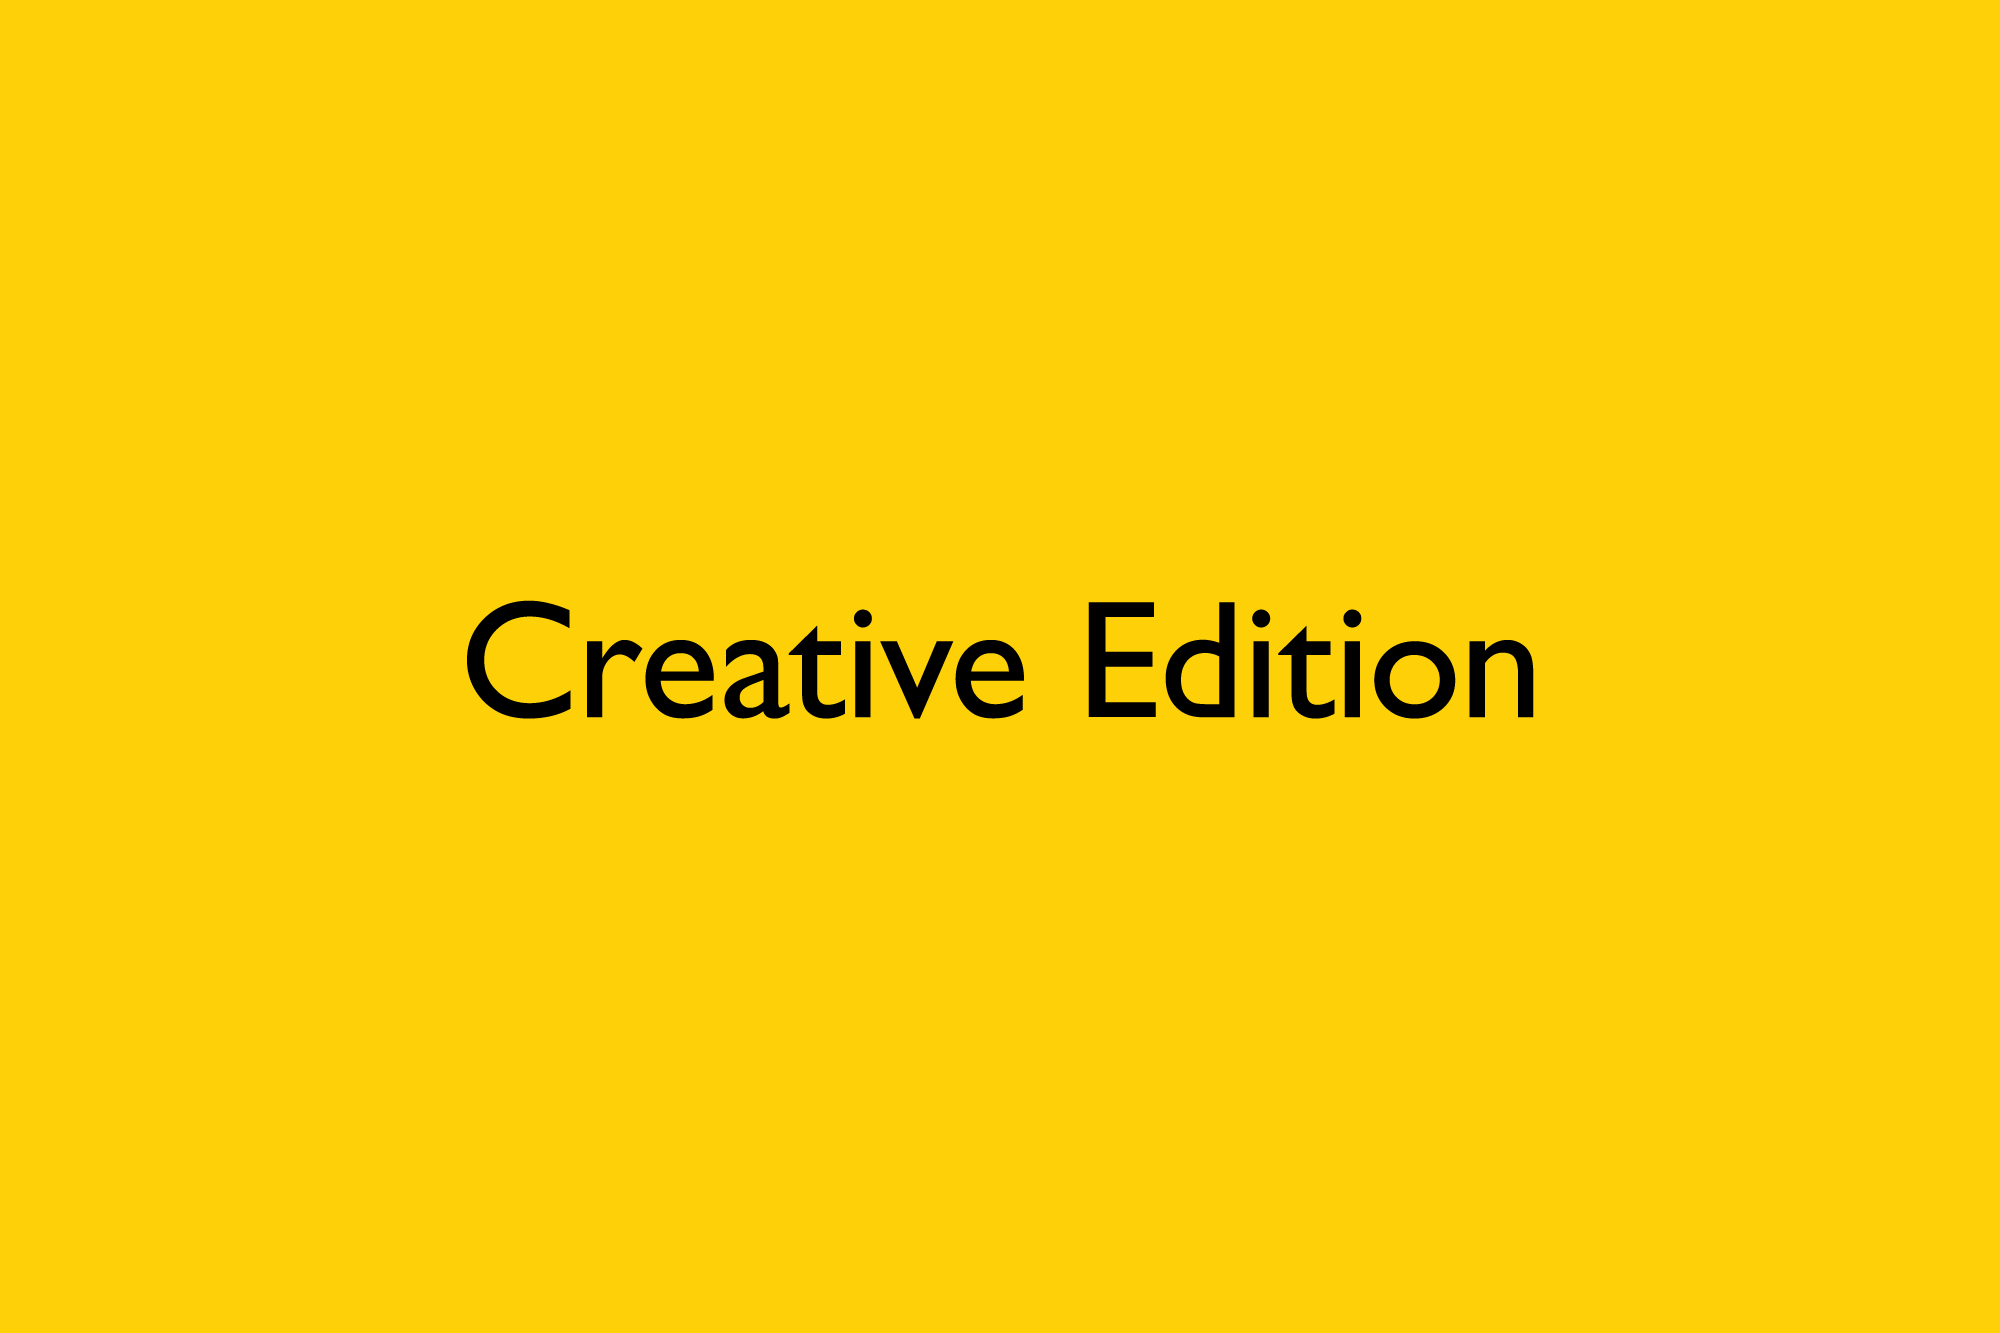 Creative-Edition-branding-logo-1-2.png